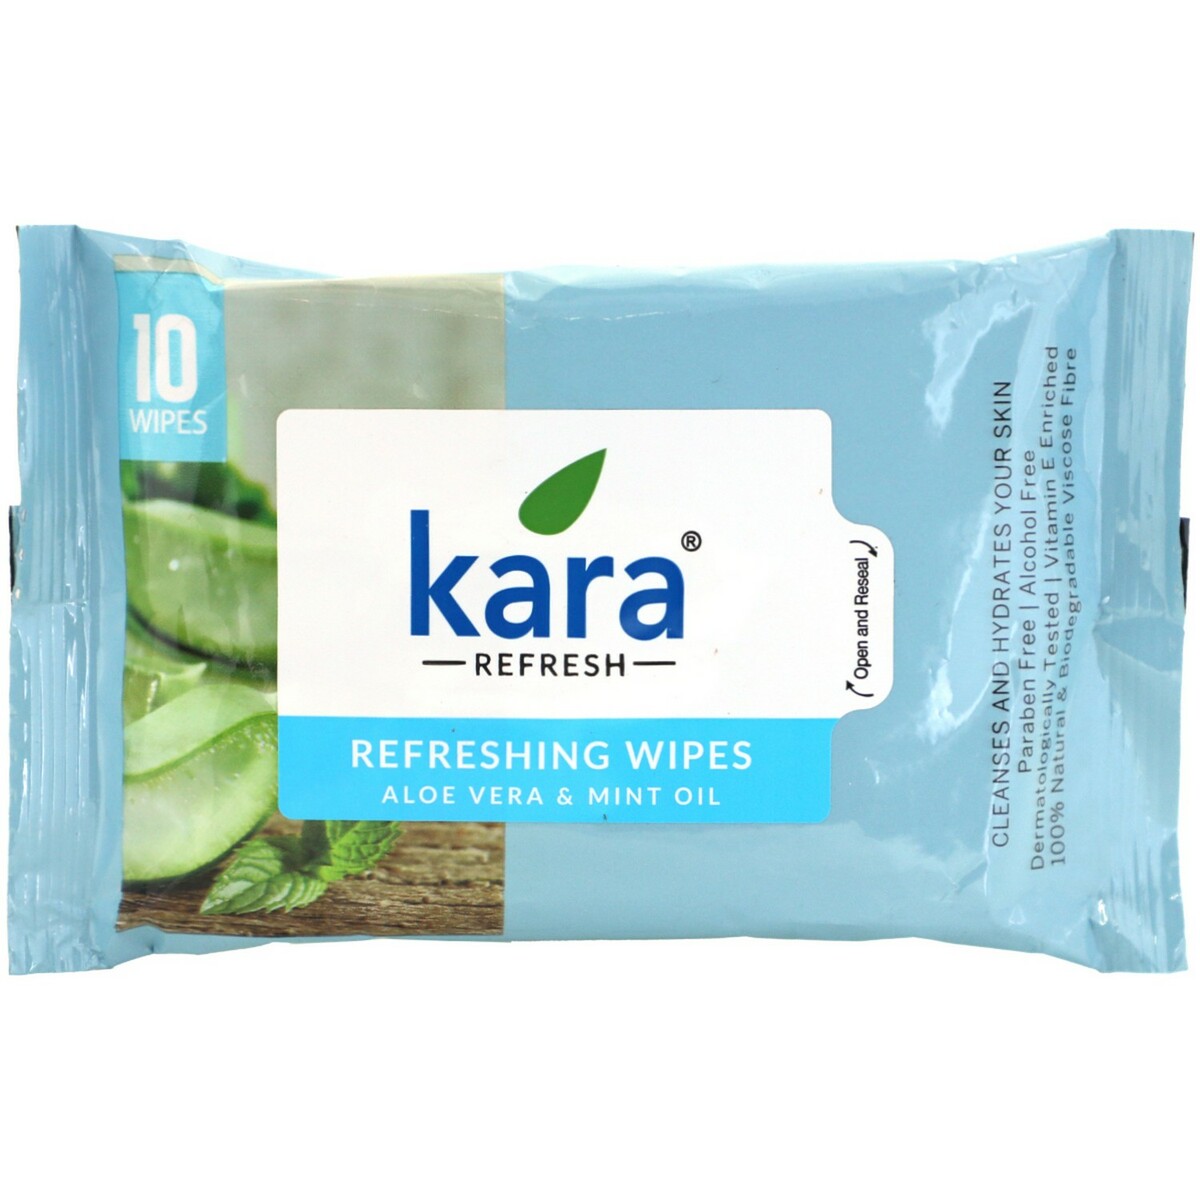 Kara Refreshing Wipes Aloevera + Mint Oil 10's